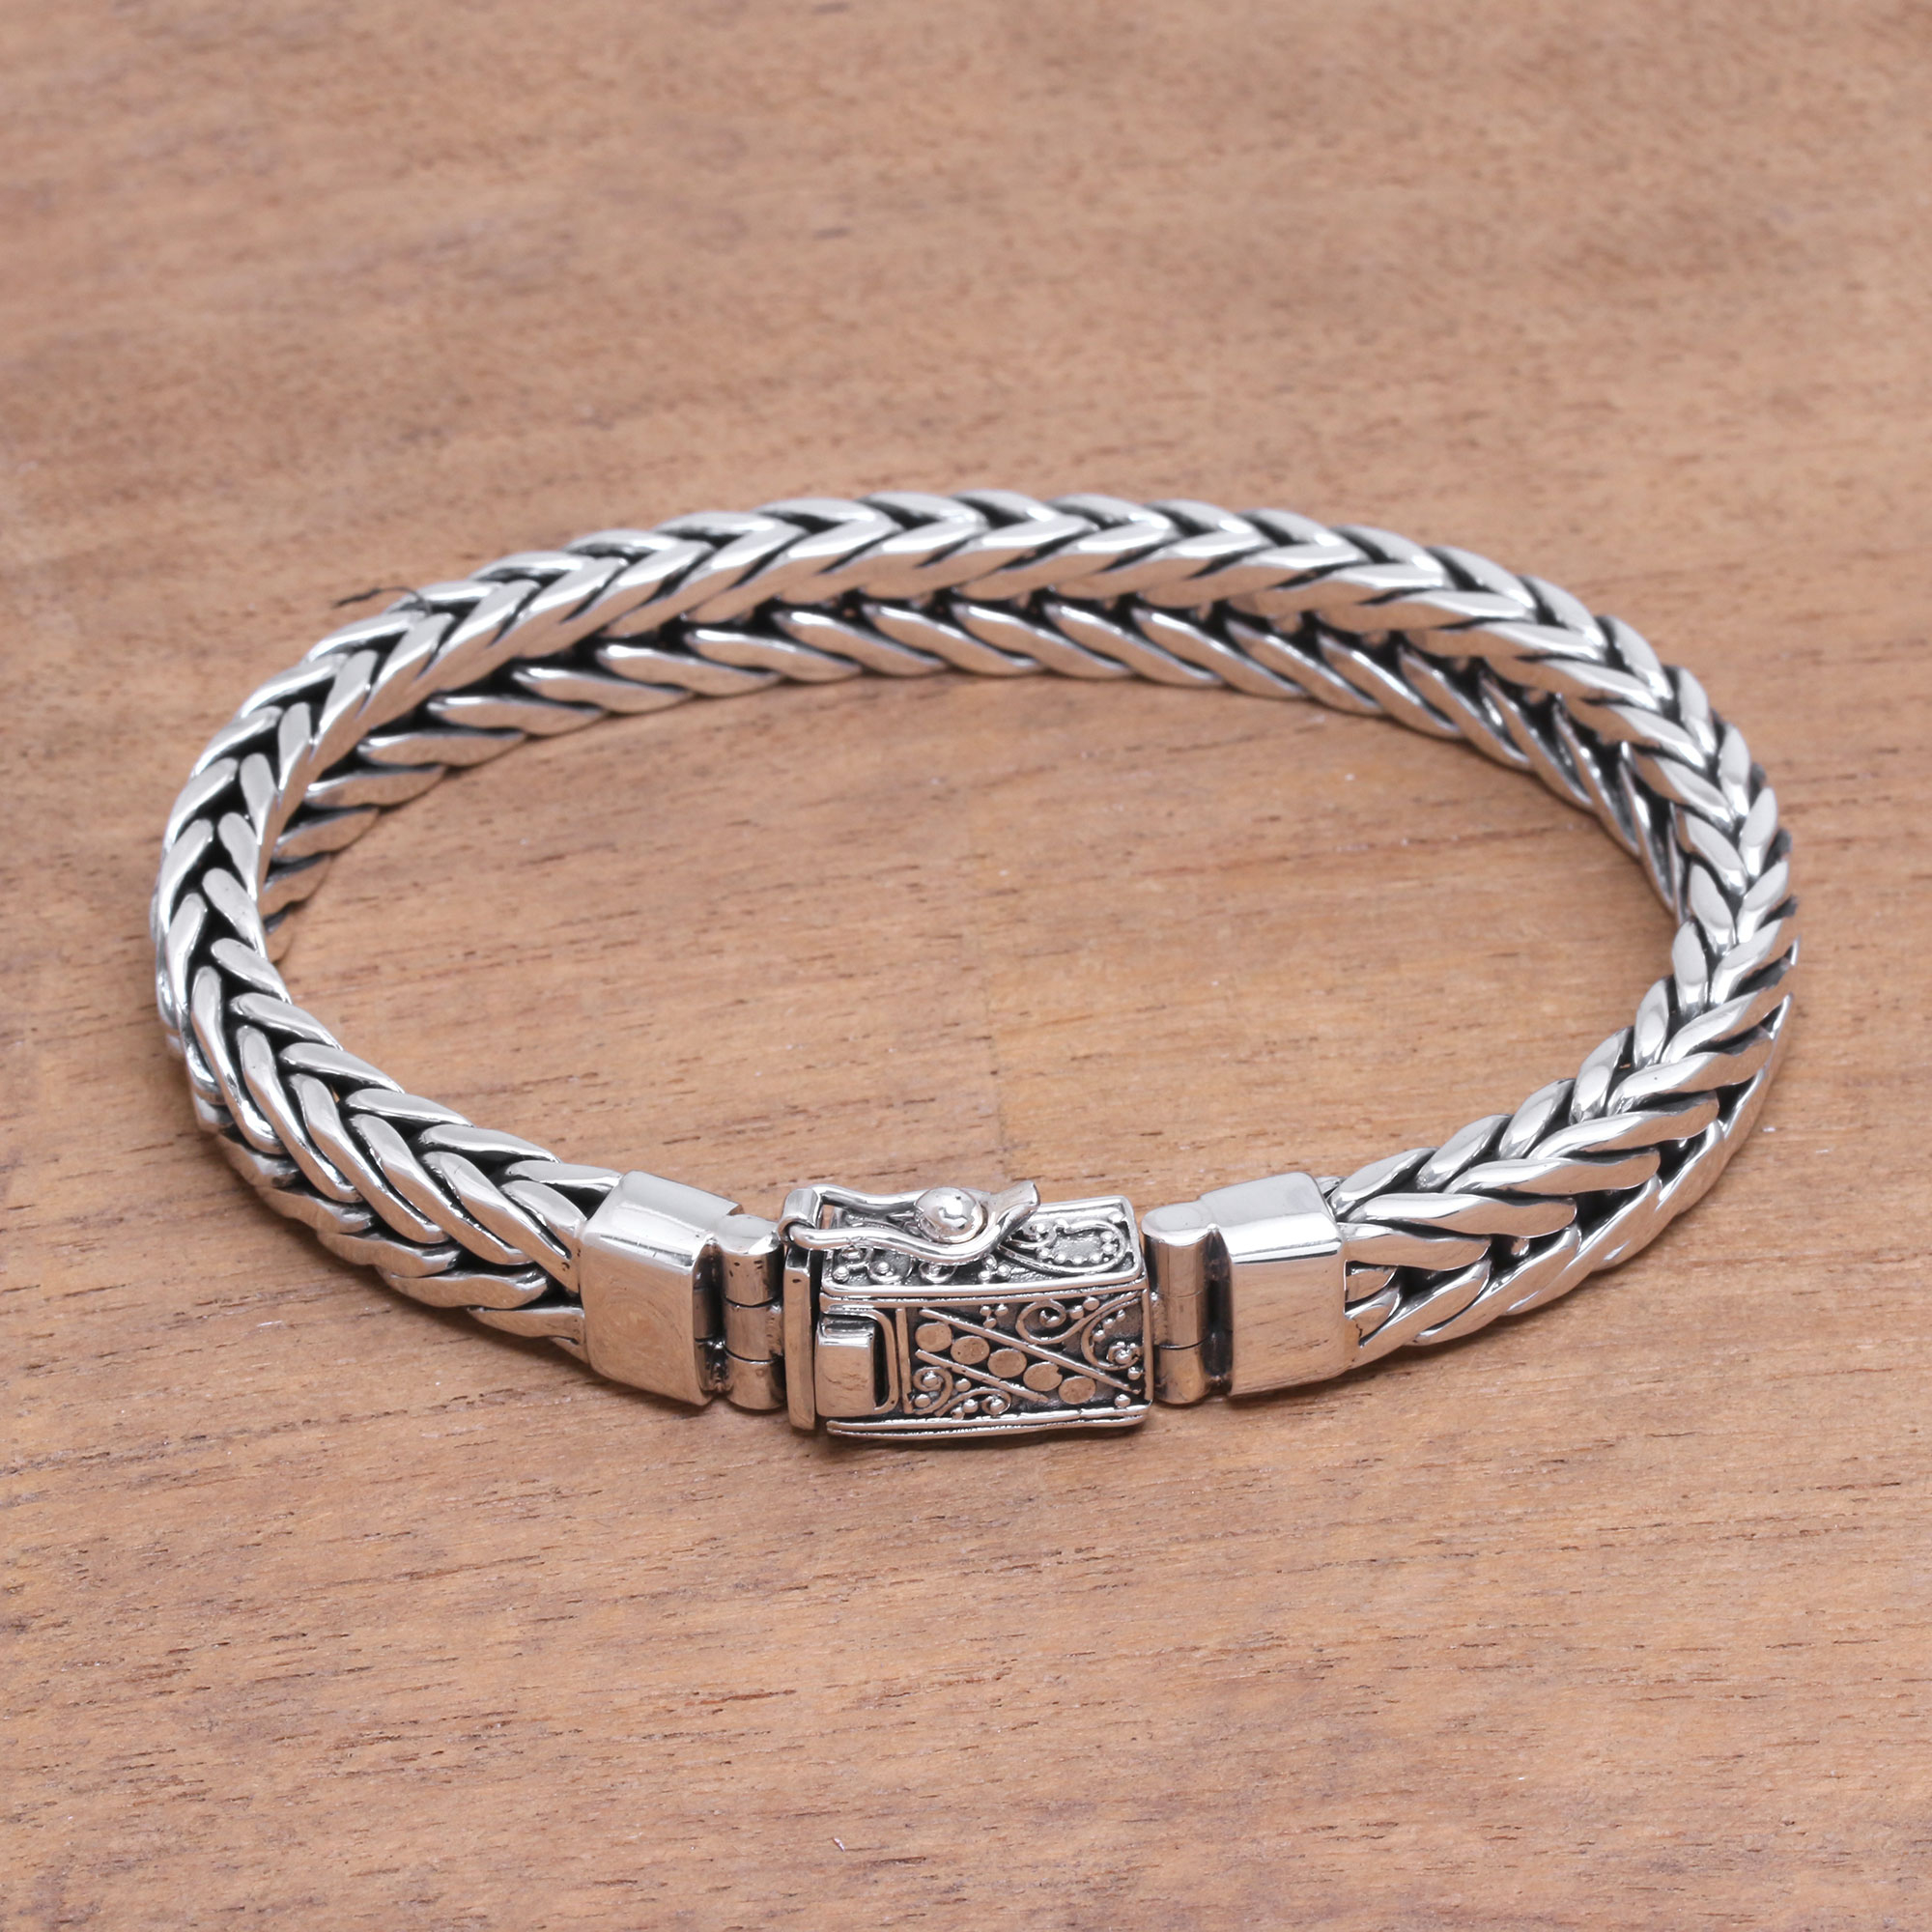 Sterling Silver Naga Chain Bracelet from Bali - Shining Naga | NOVICA